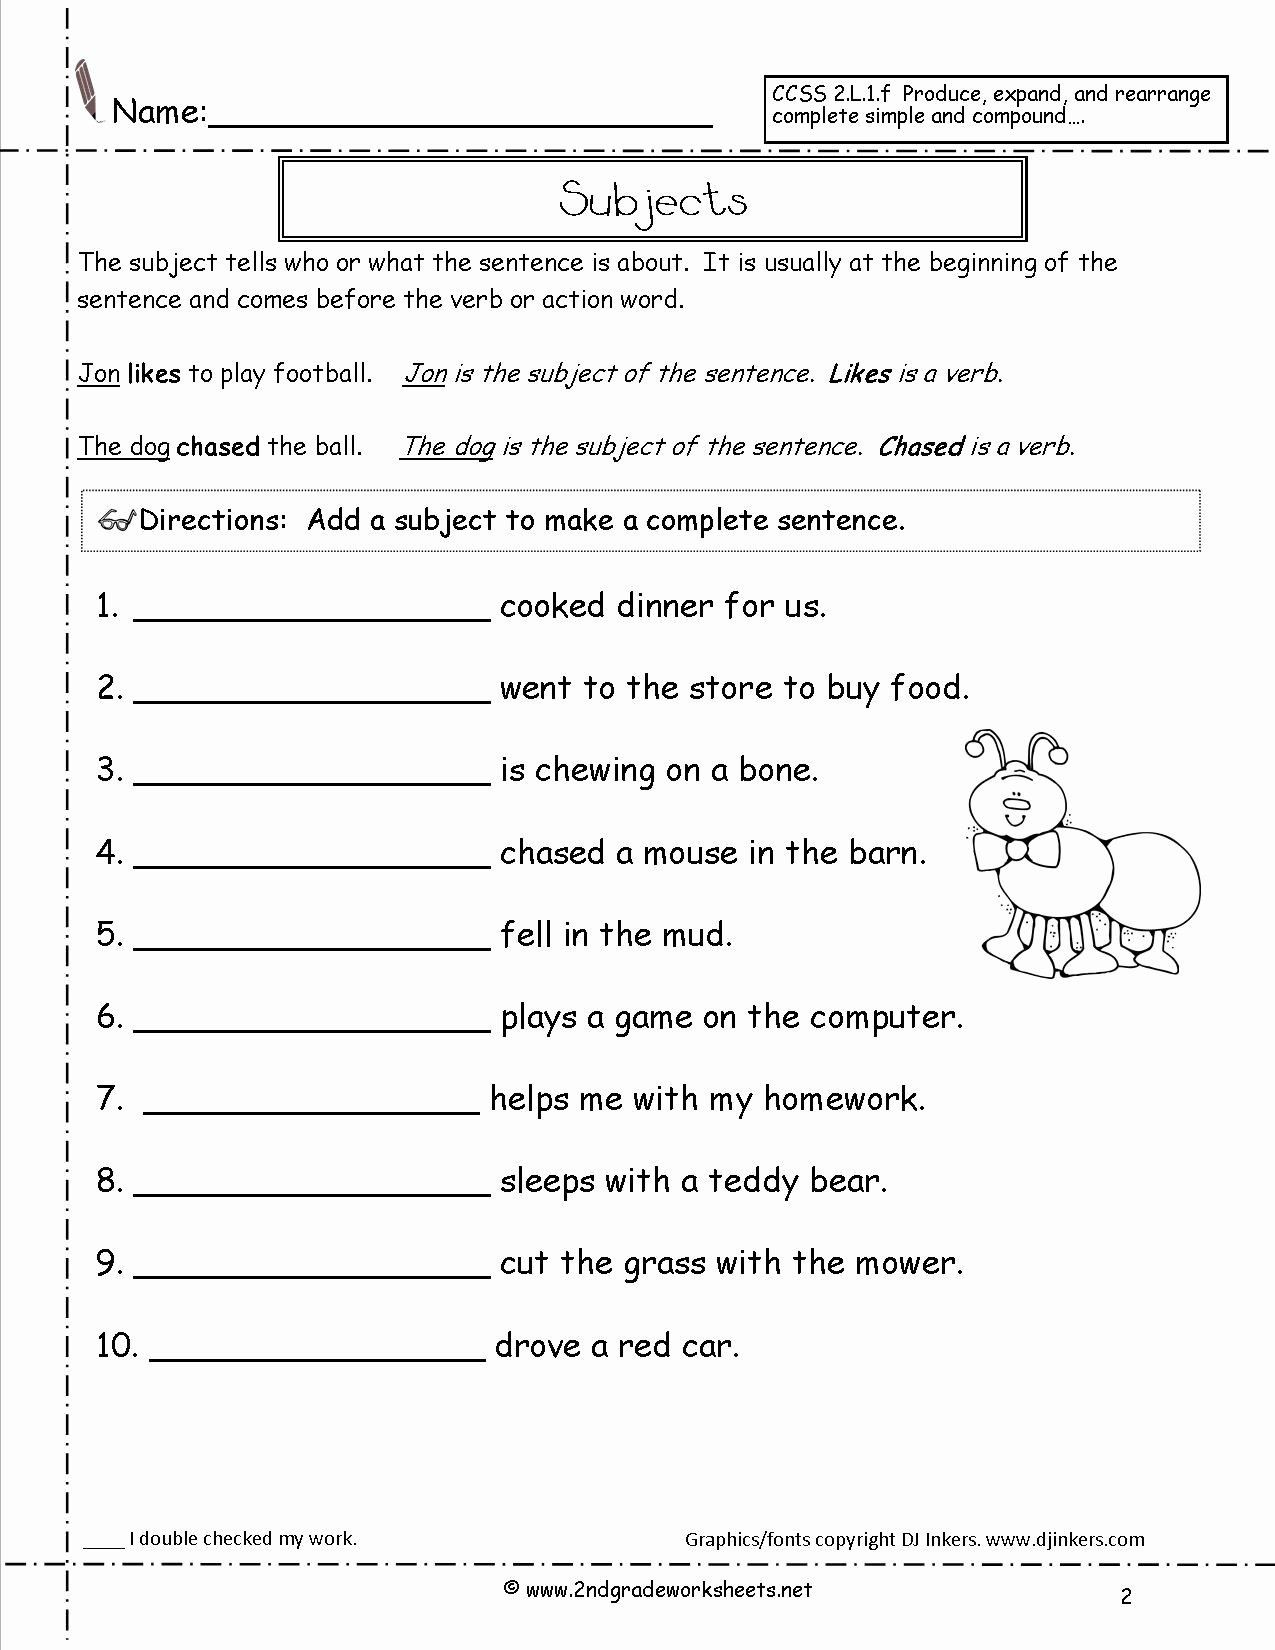 Types Of Sentences Worksheet Pin On Professionally Designed Worksheets